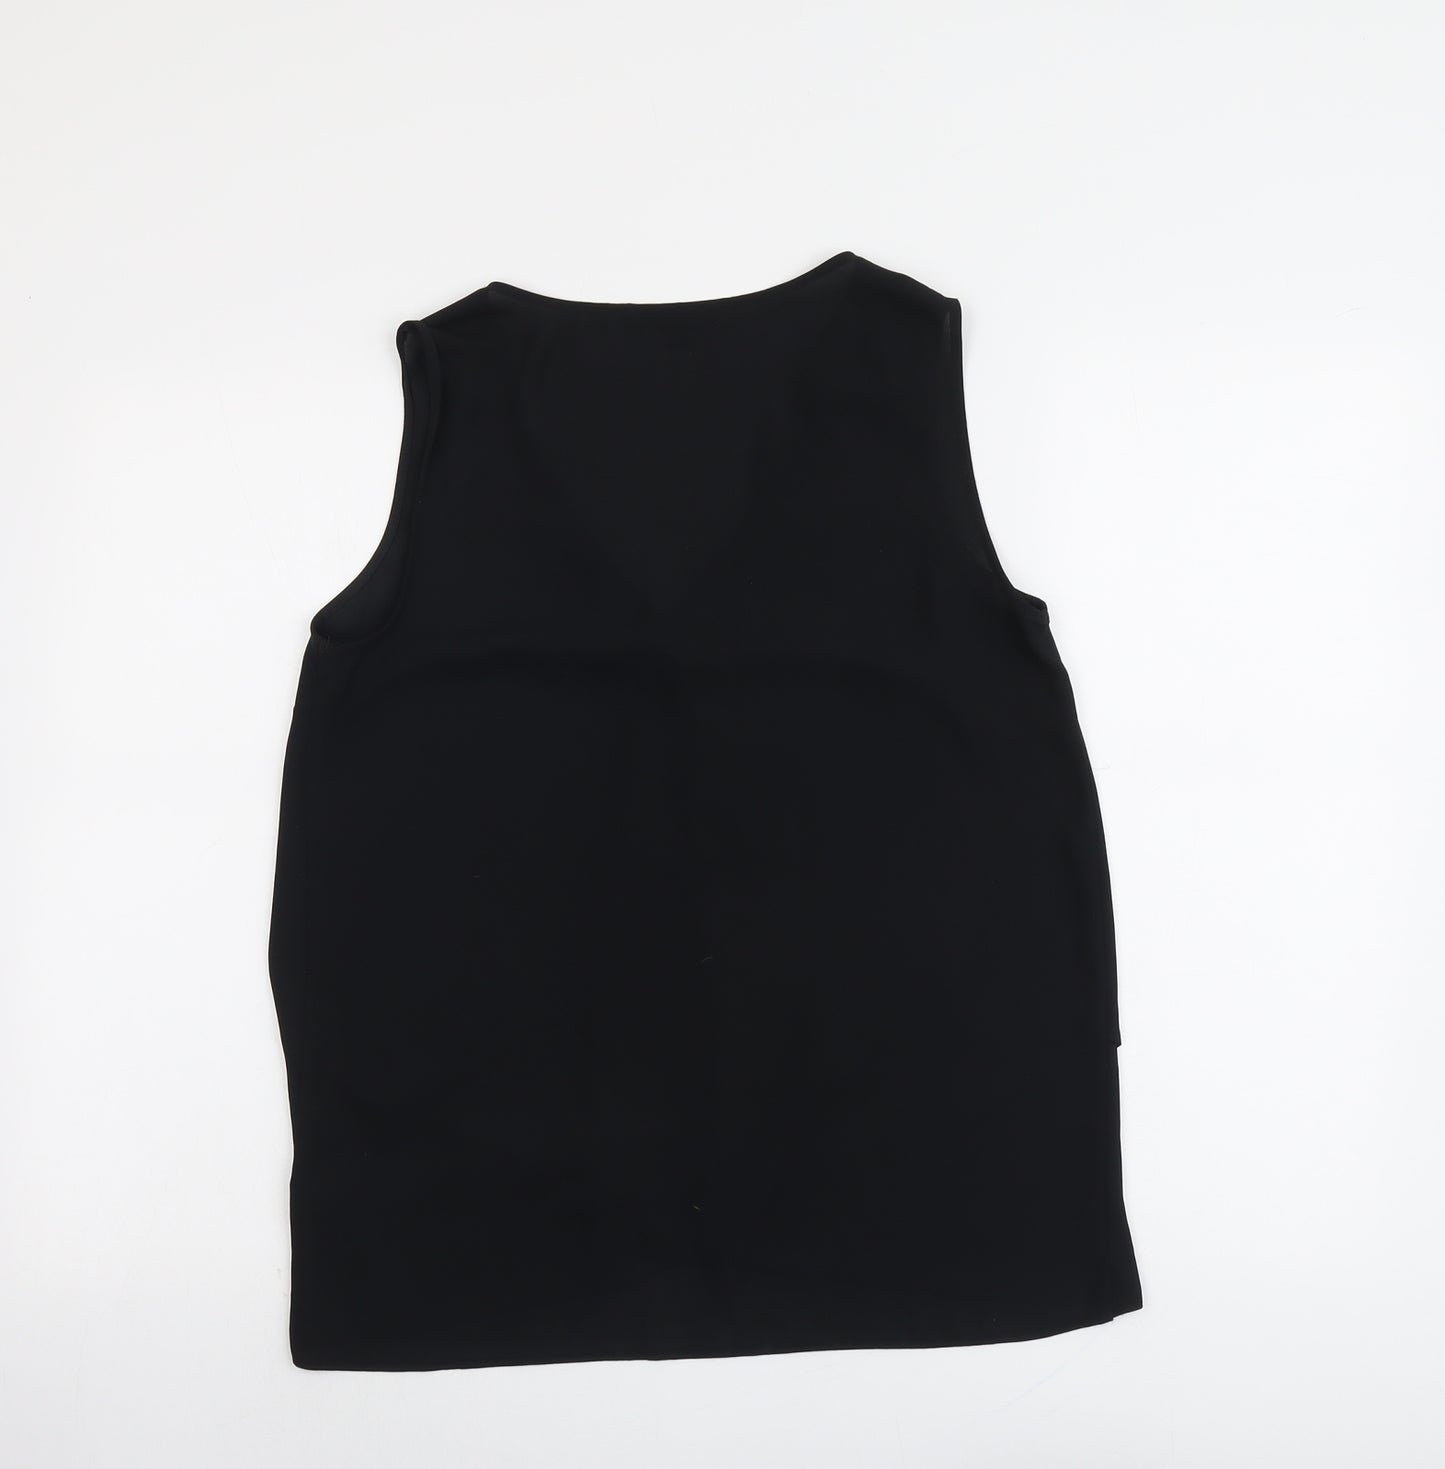 NEXT Womens Black Polyester Basic Blouse Size 12 V-Neck